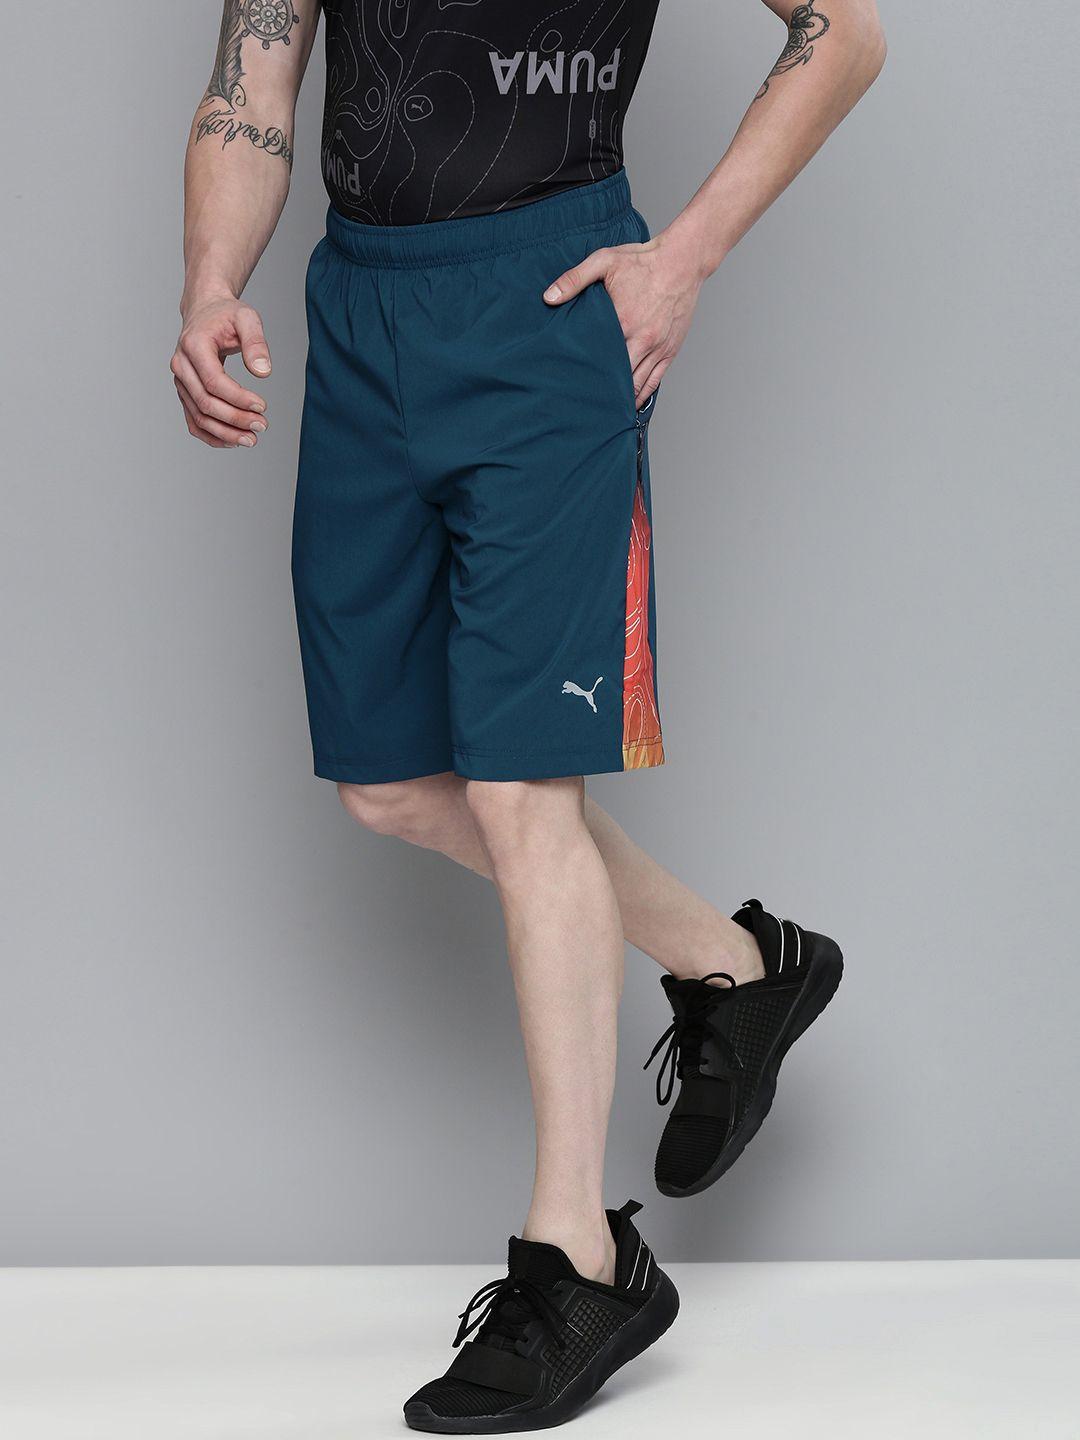 one8 x puma men regular fit printed virat kohli active sports shorts